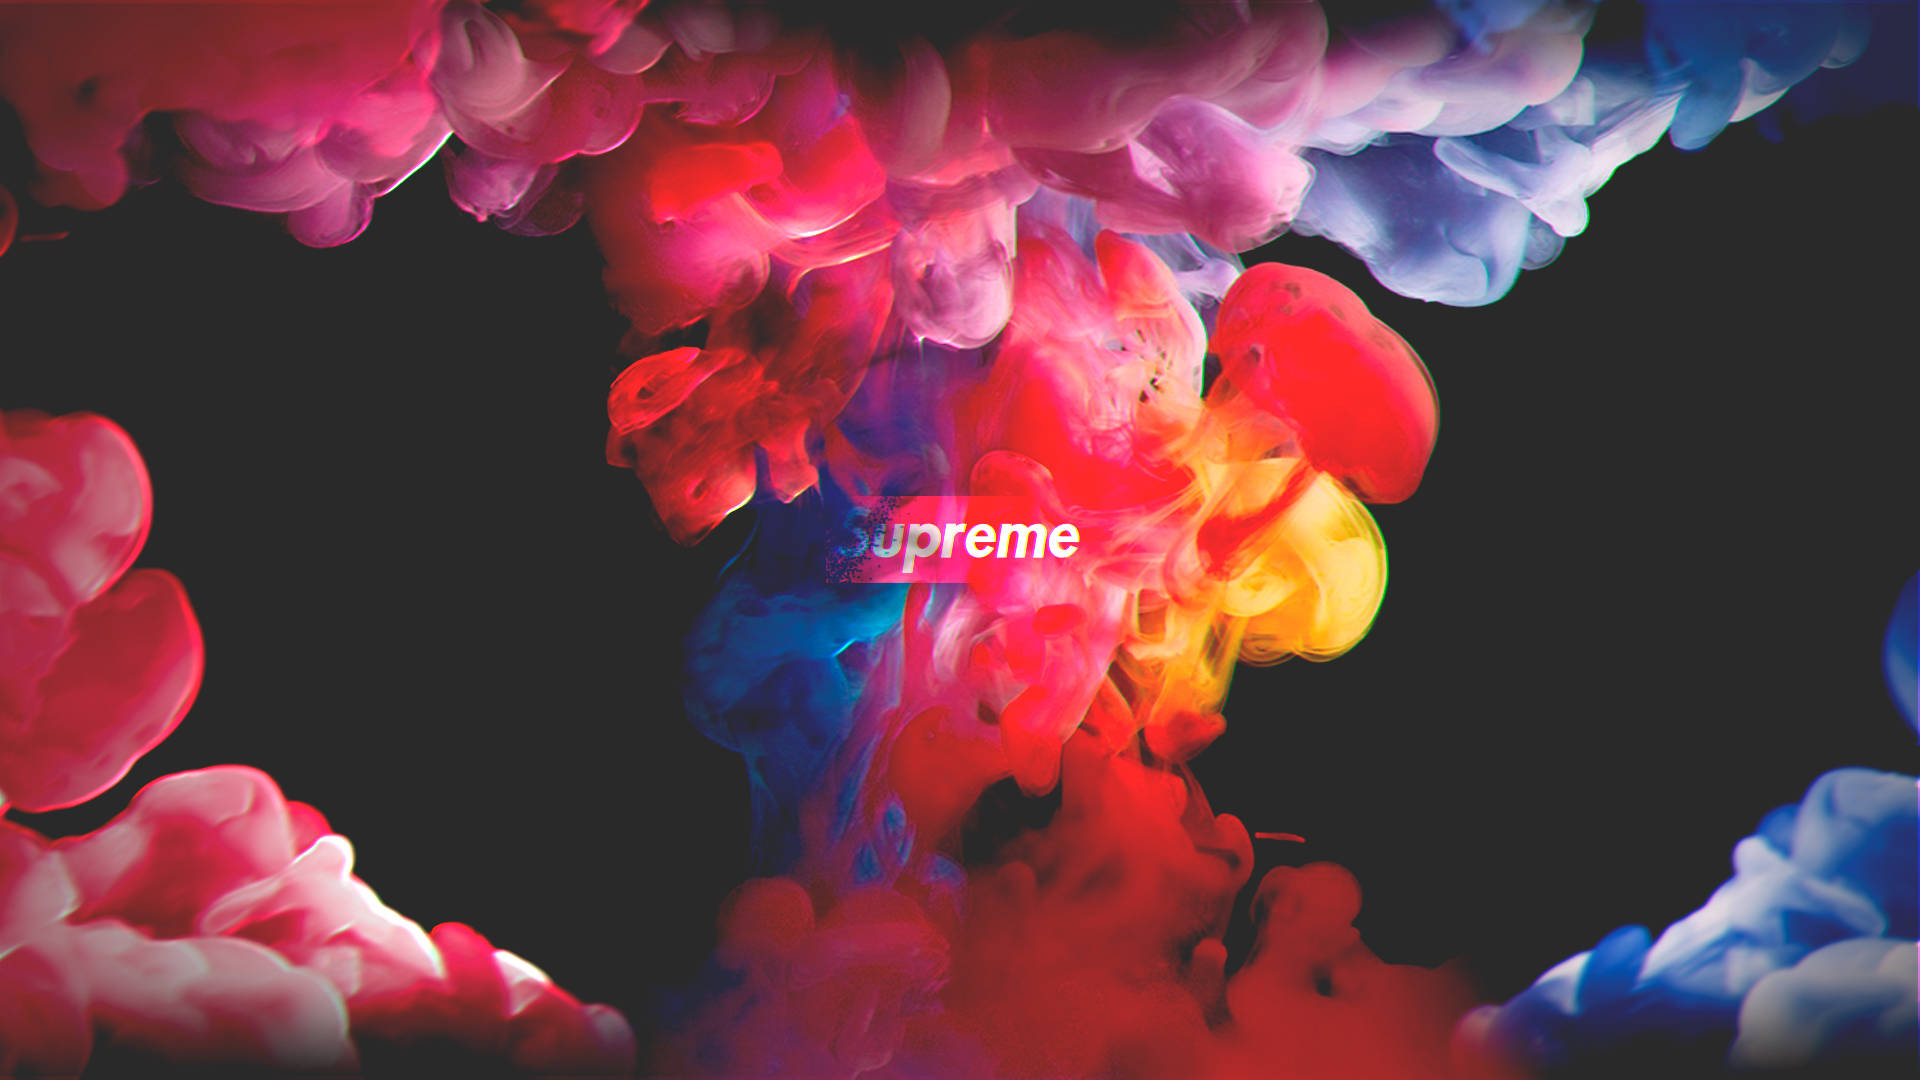 Superior Supreme Logo With Colorful Smoke Wallpaper